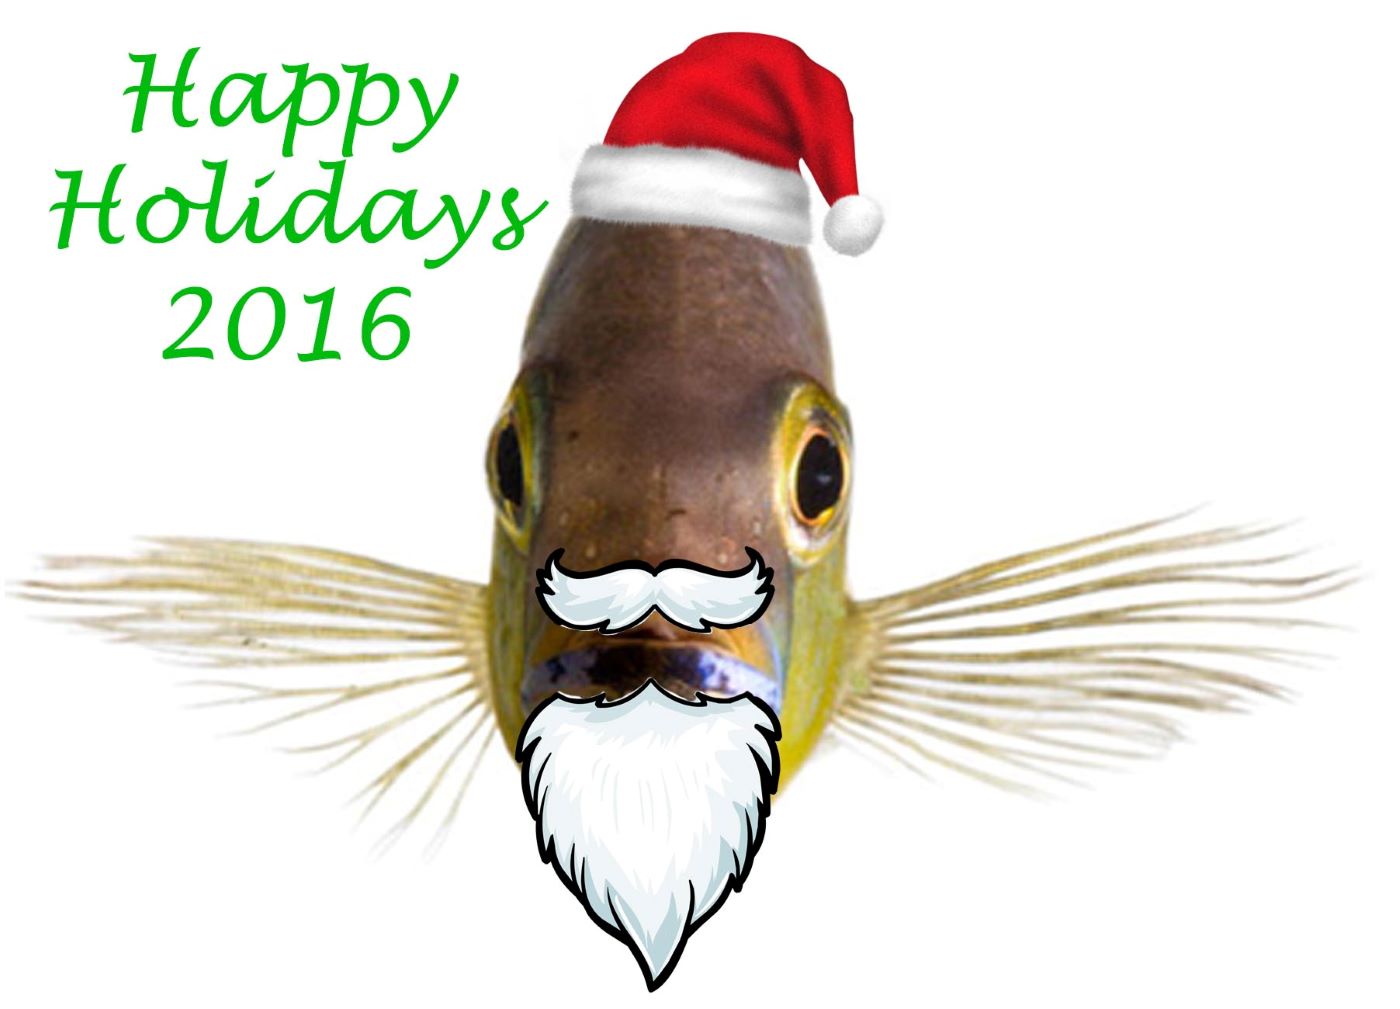 Fish happy holidays 2016 image